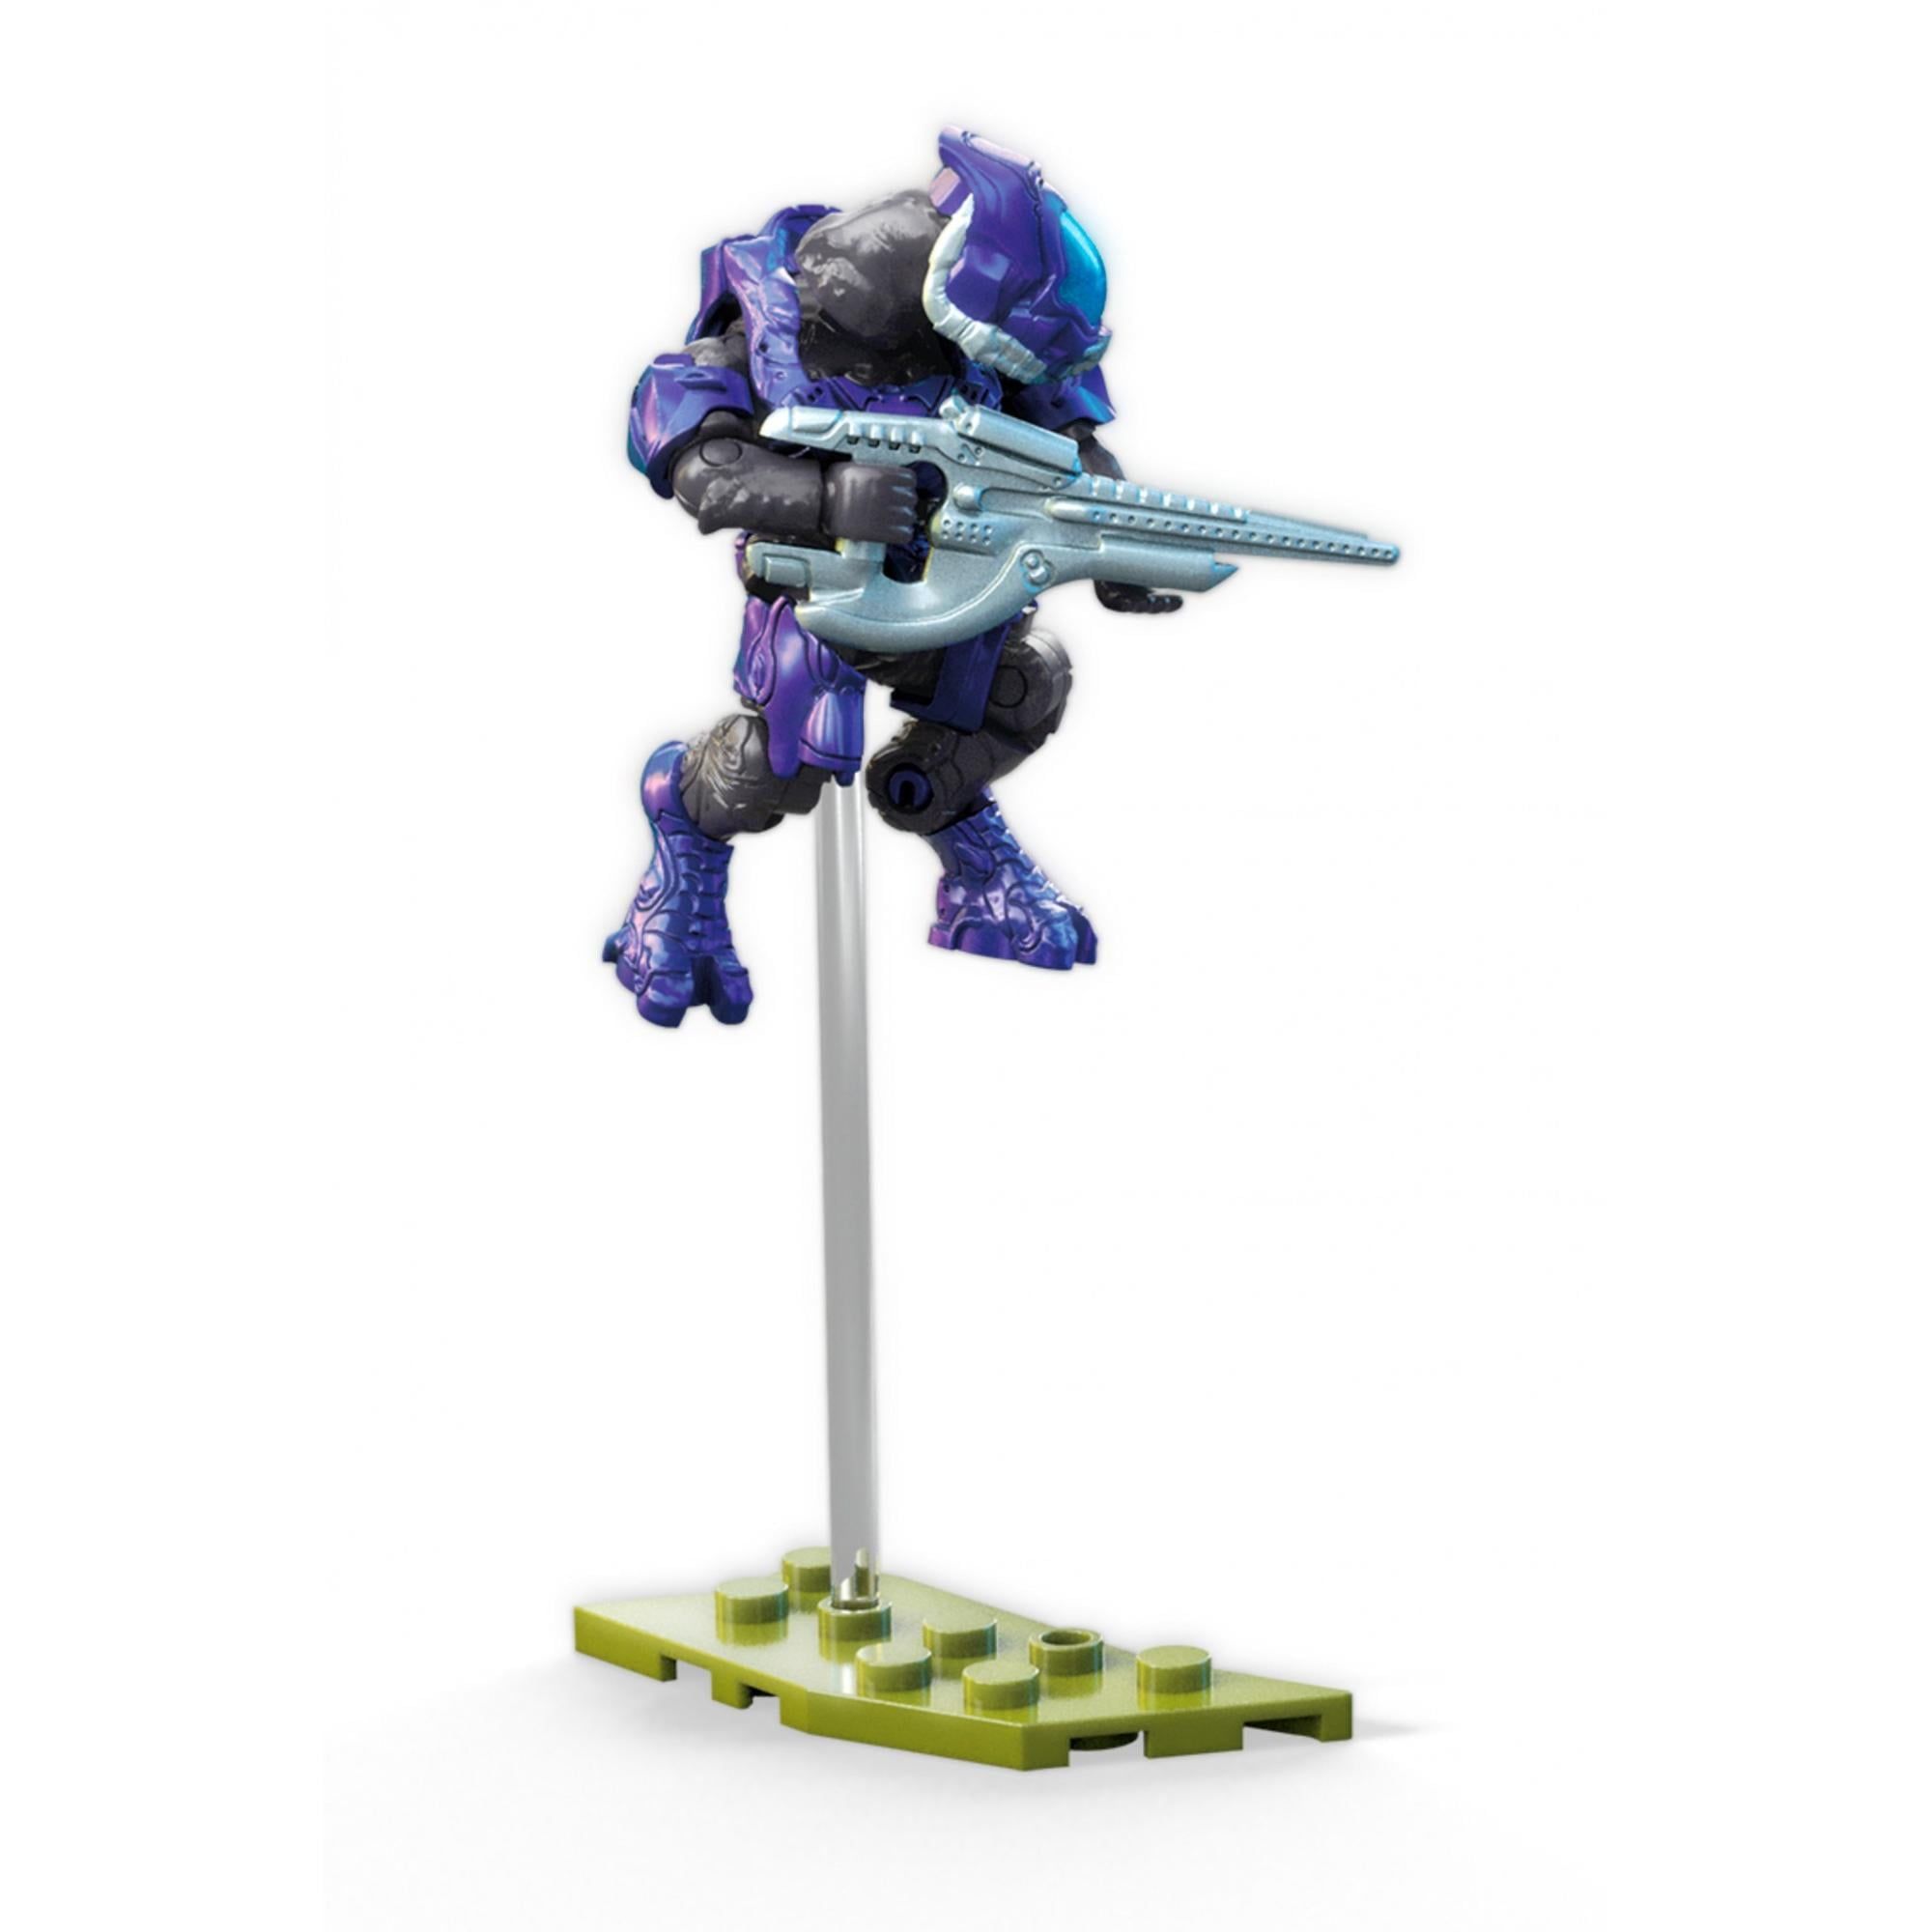 Halo Heroes Spartan Mark IV Mega Bloks Construx Figure Set 24pc MOSC Series 7 for sale online 